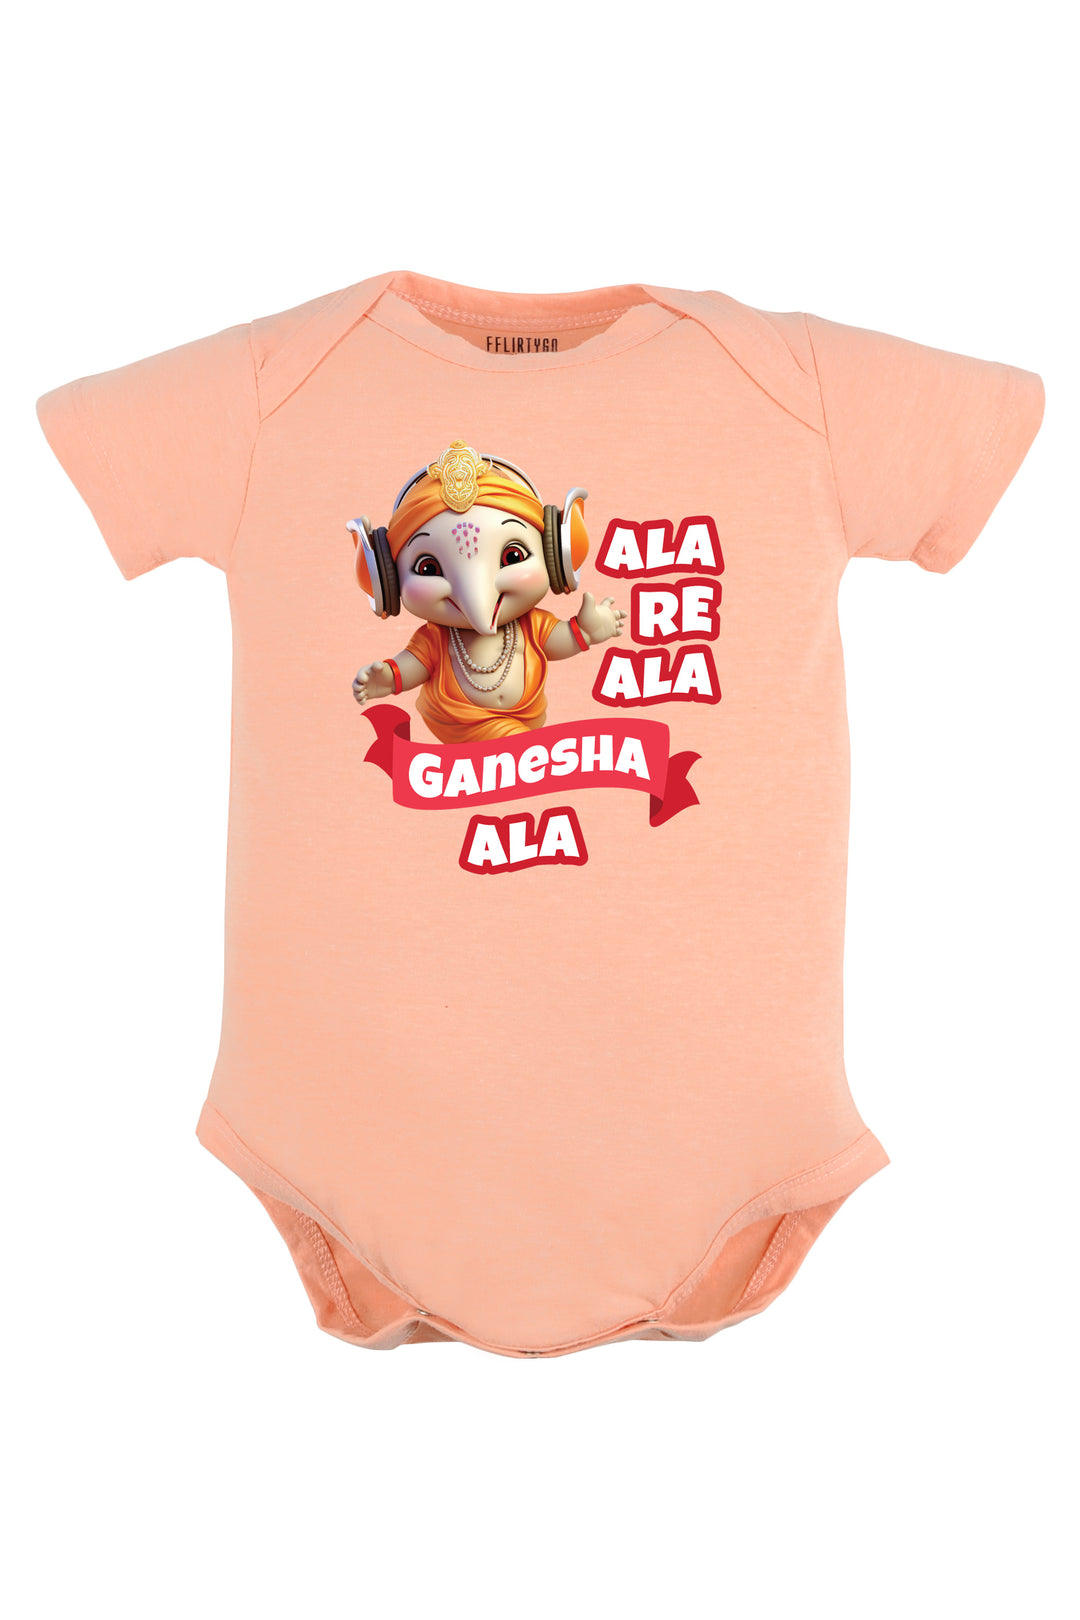 Ala Re Ala Ganesha Ala Baby Romper | Onesies